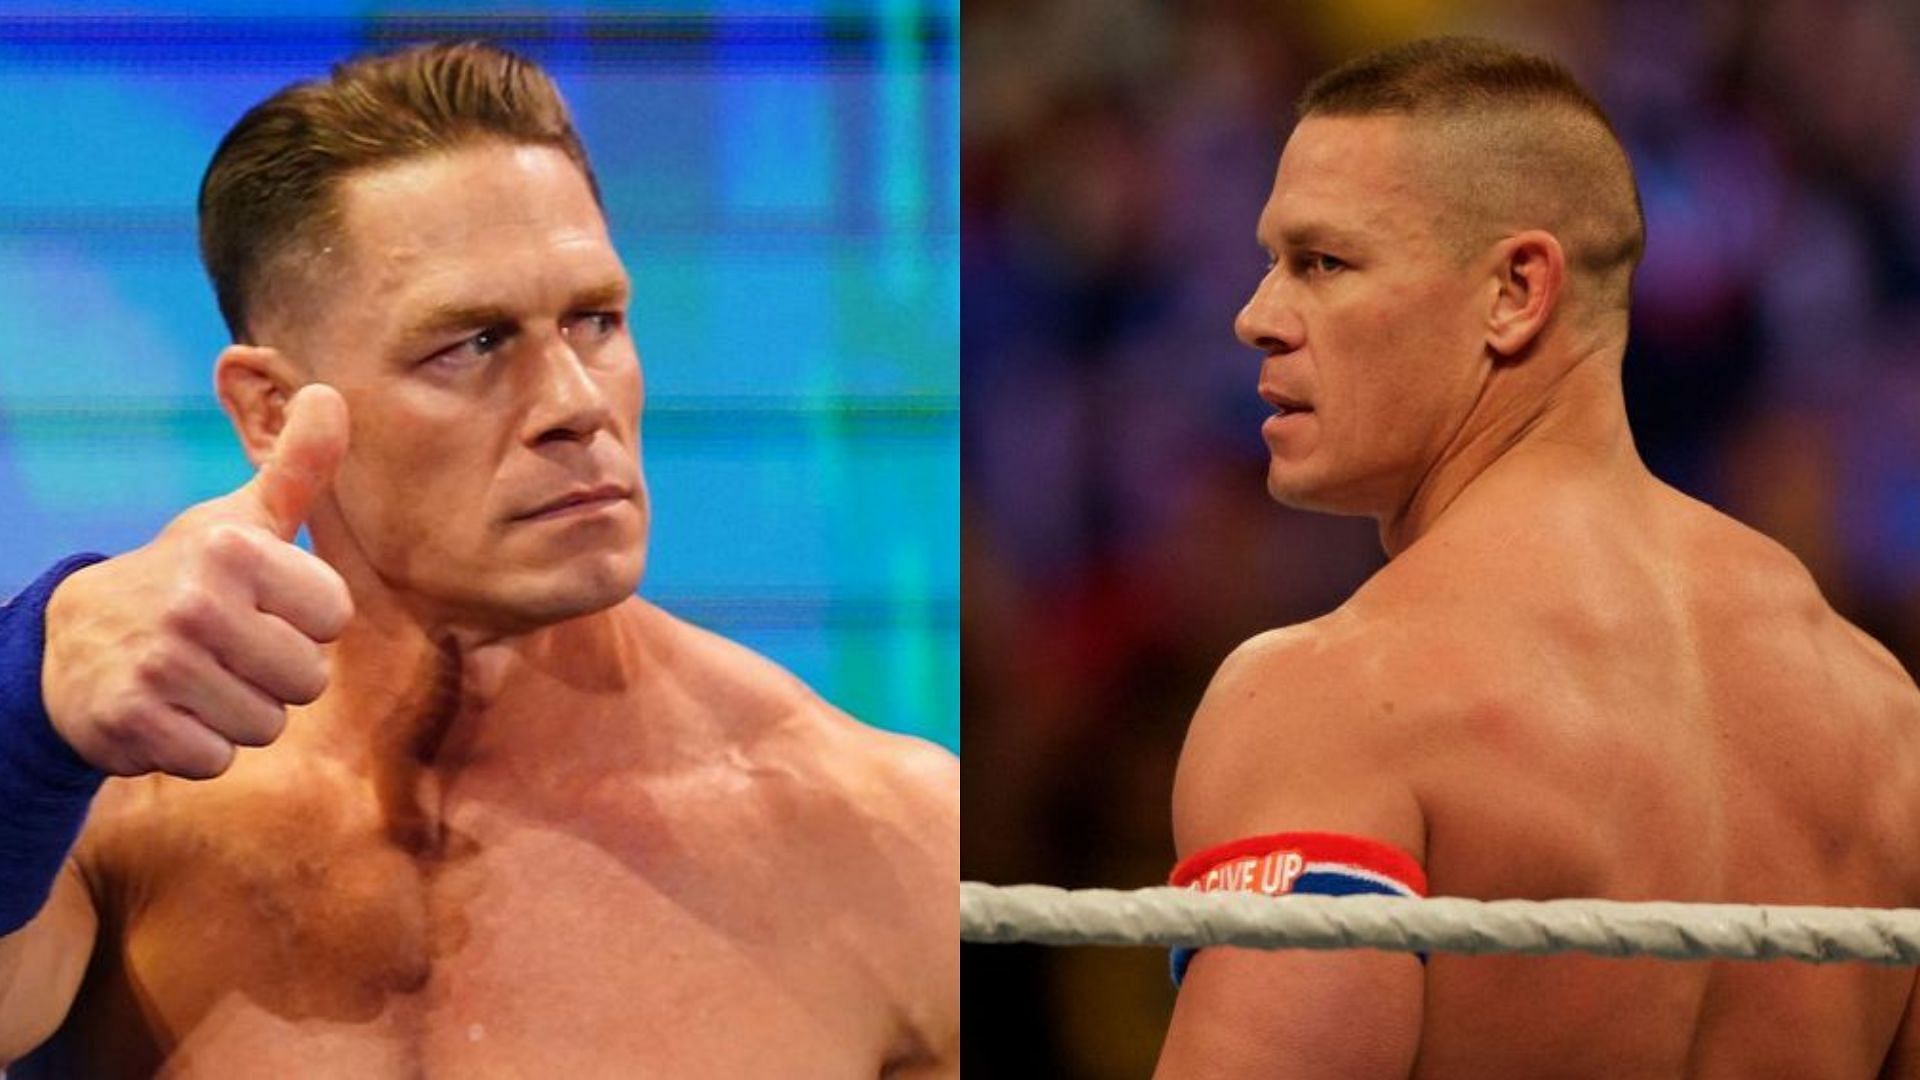 John Cena will be on The Grayson Waller Effect